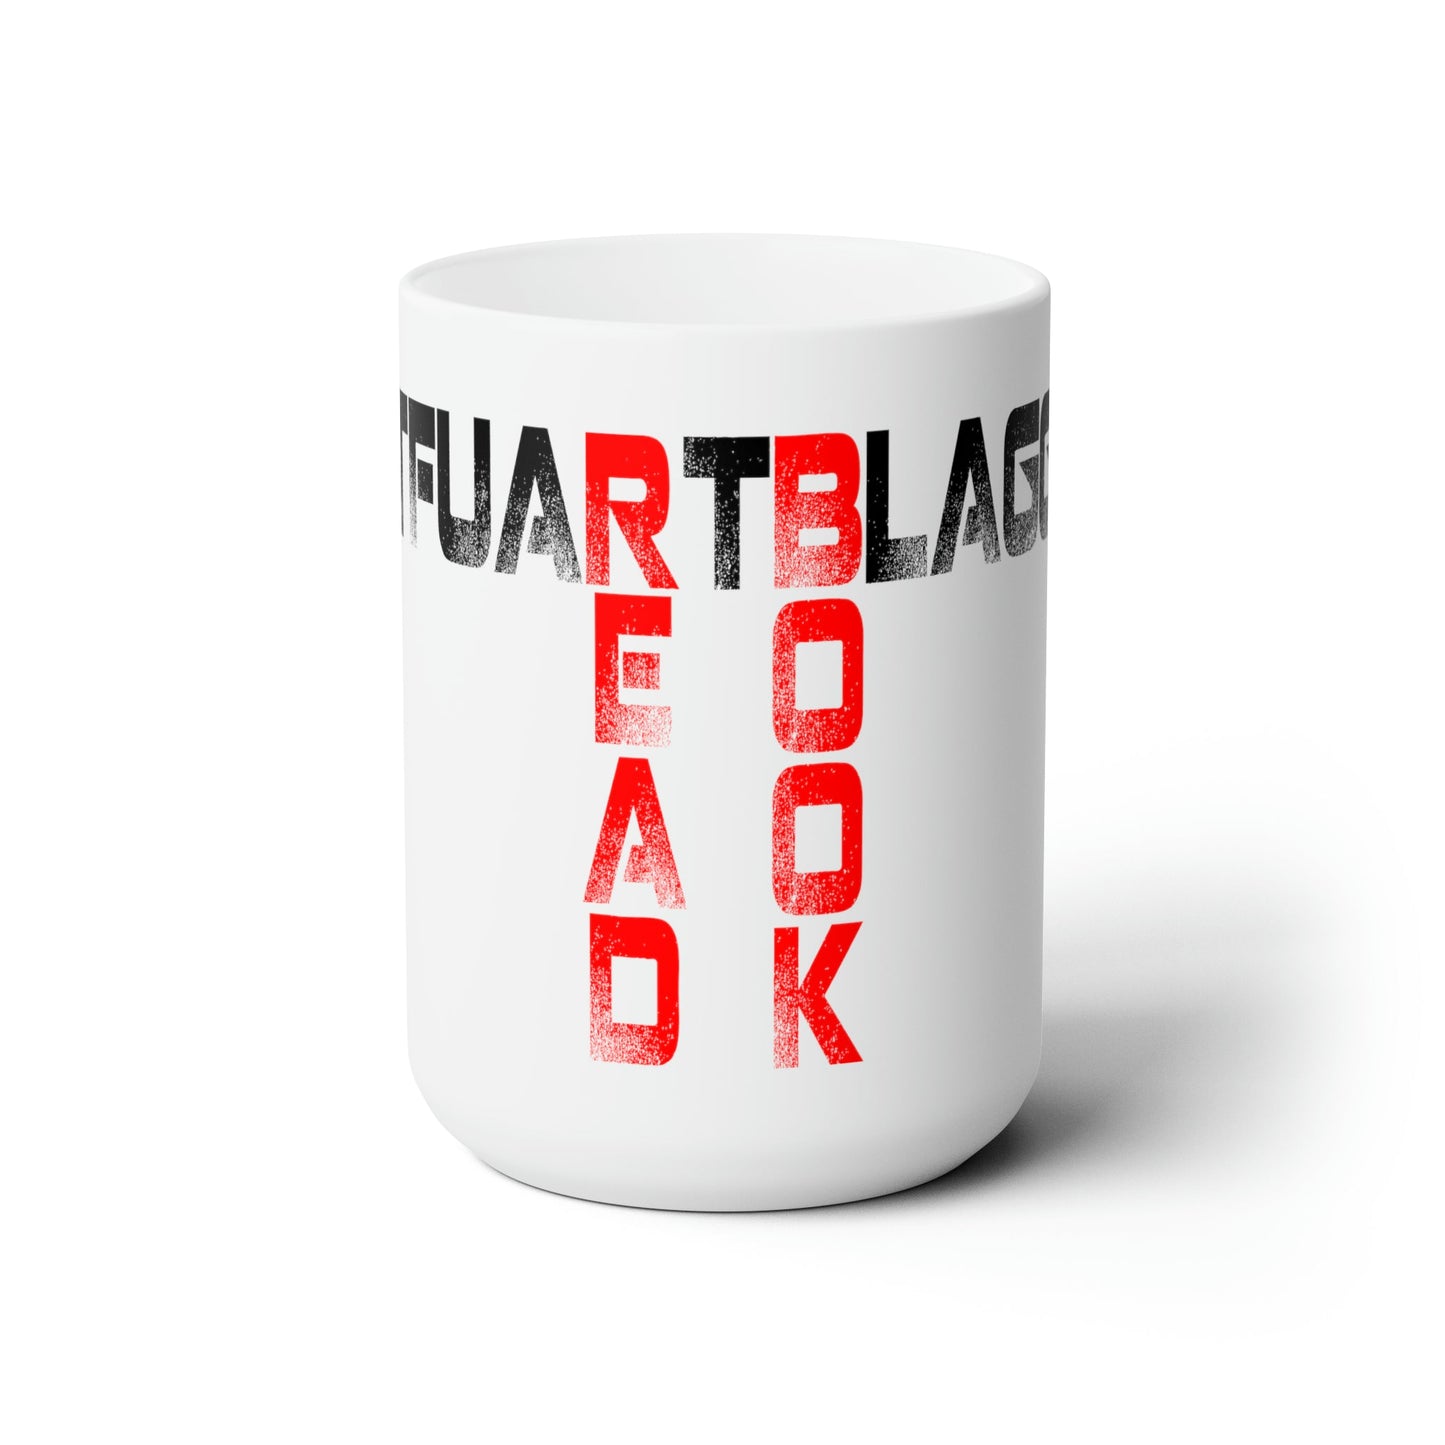 STFUARTBLAGG - Ceramic Mug 15oz - Dark Mafia Romance for Adults